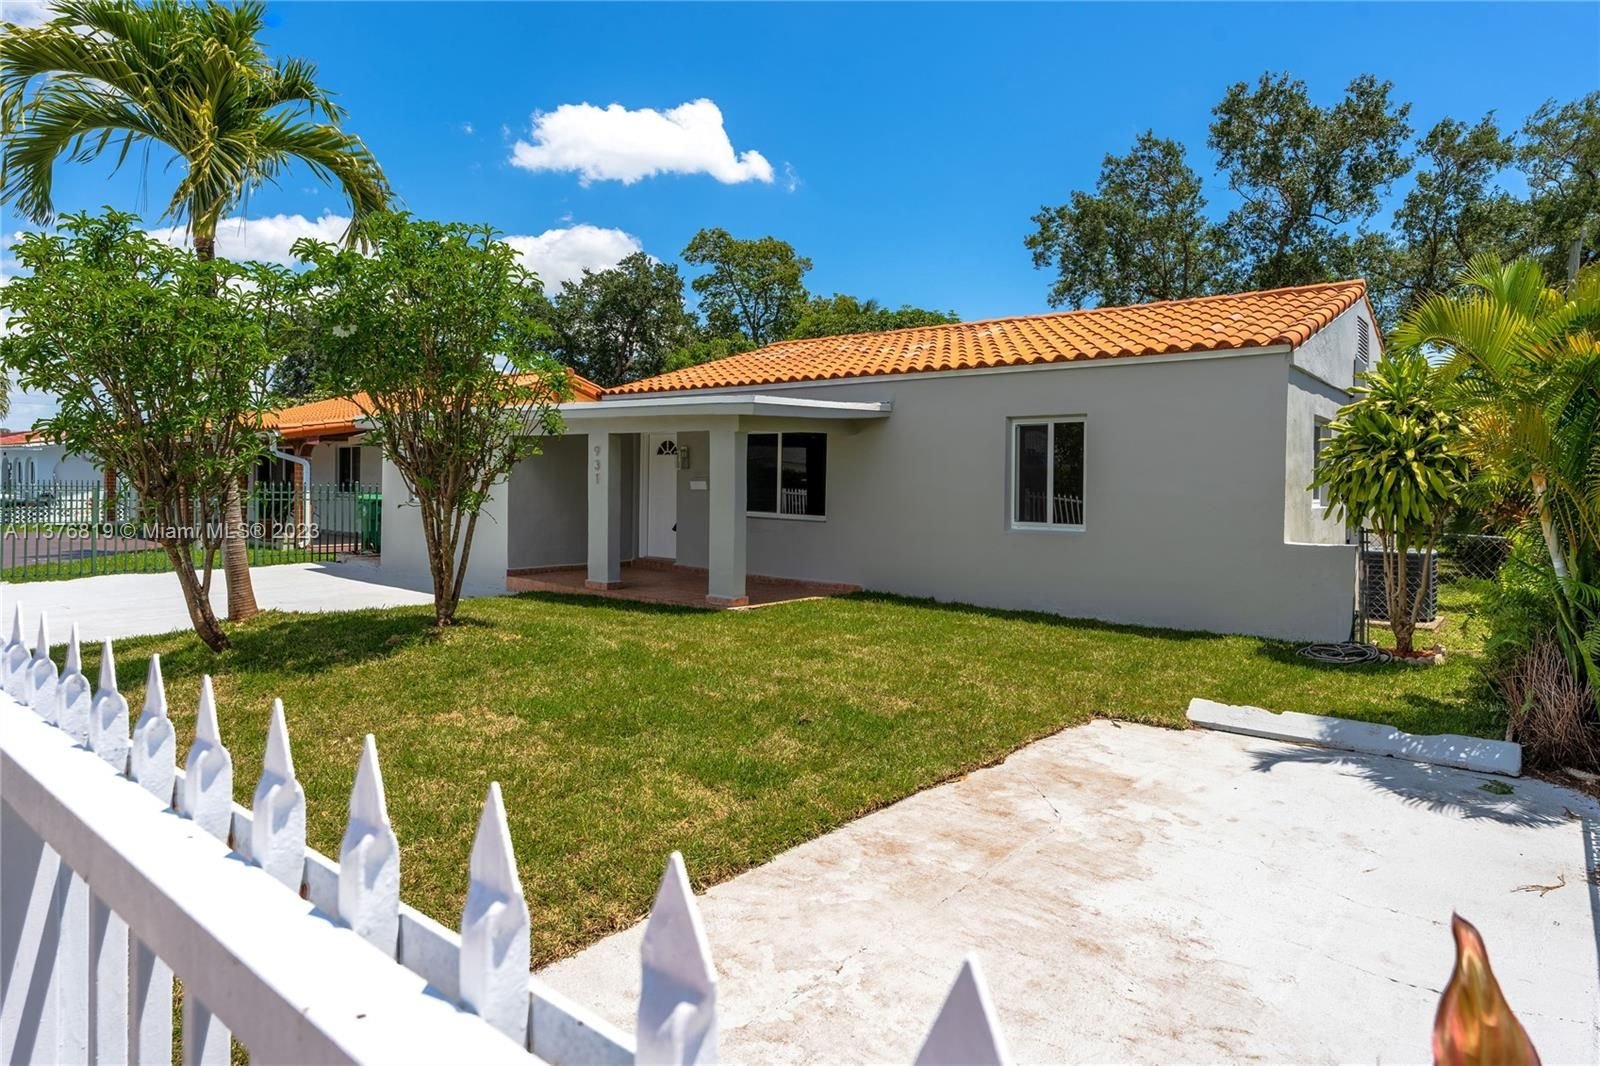 Real estate property located at 931 30th Ct, Miami-Dade County, Miami, FL